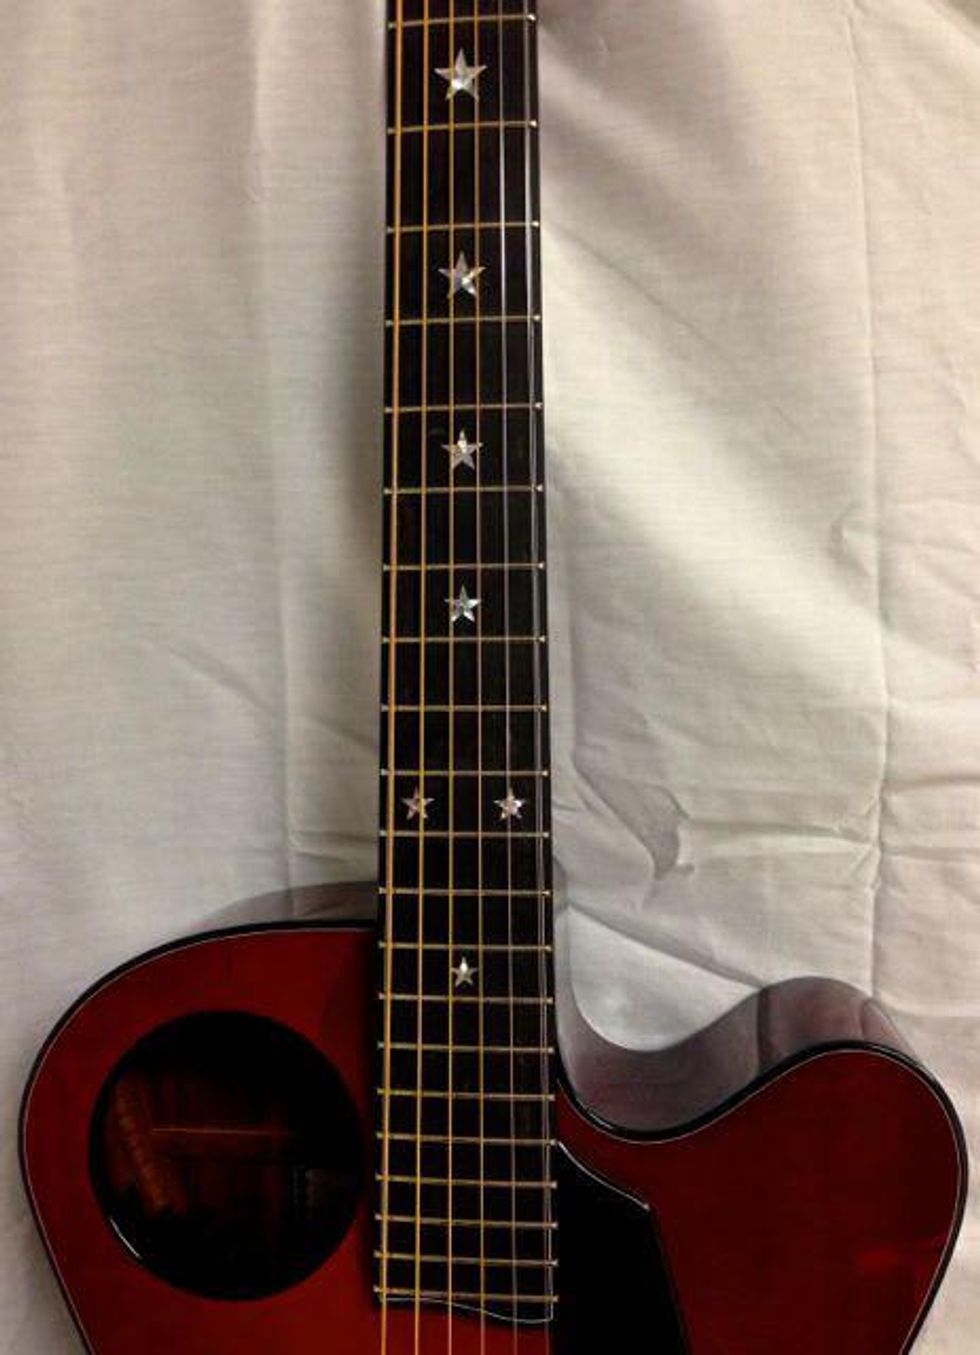 Zoltan David guitar for auction